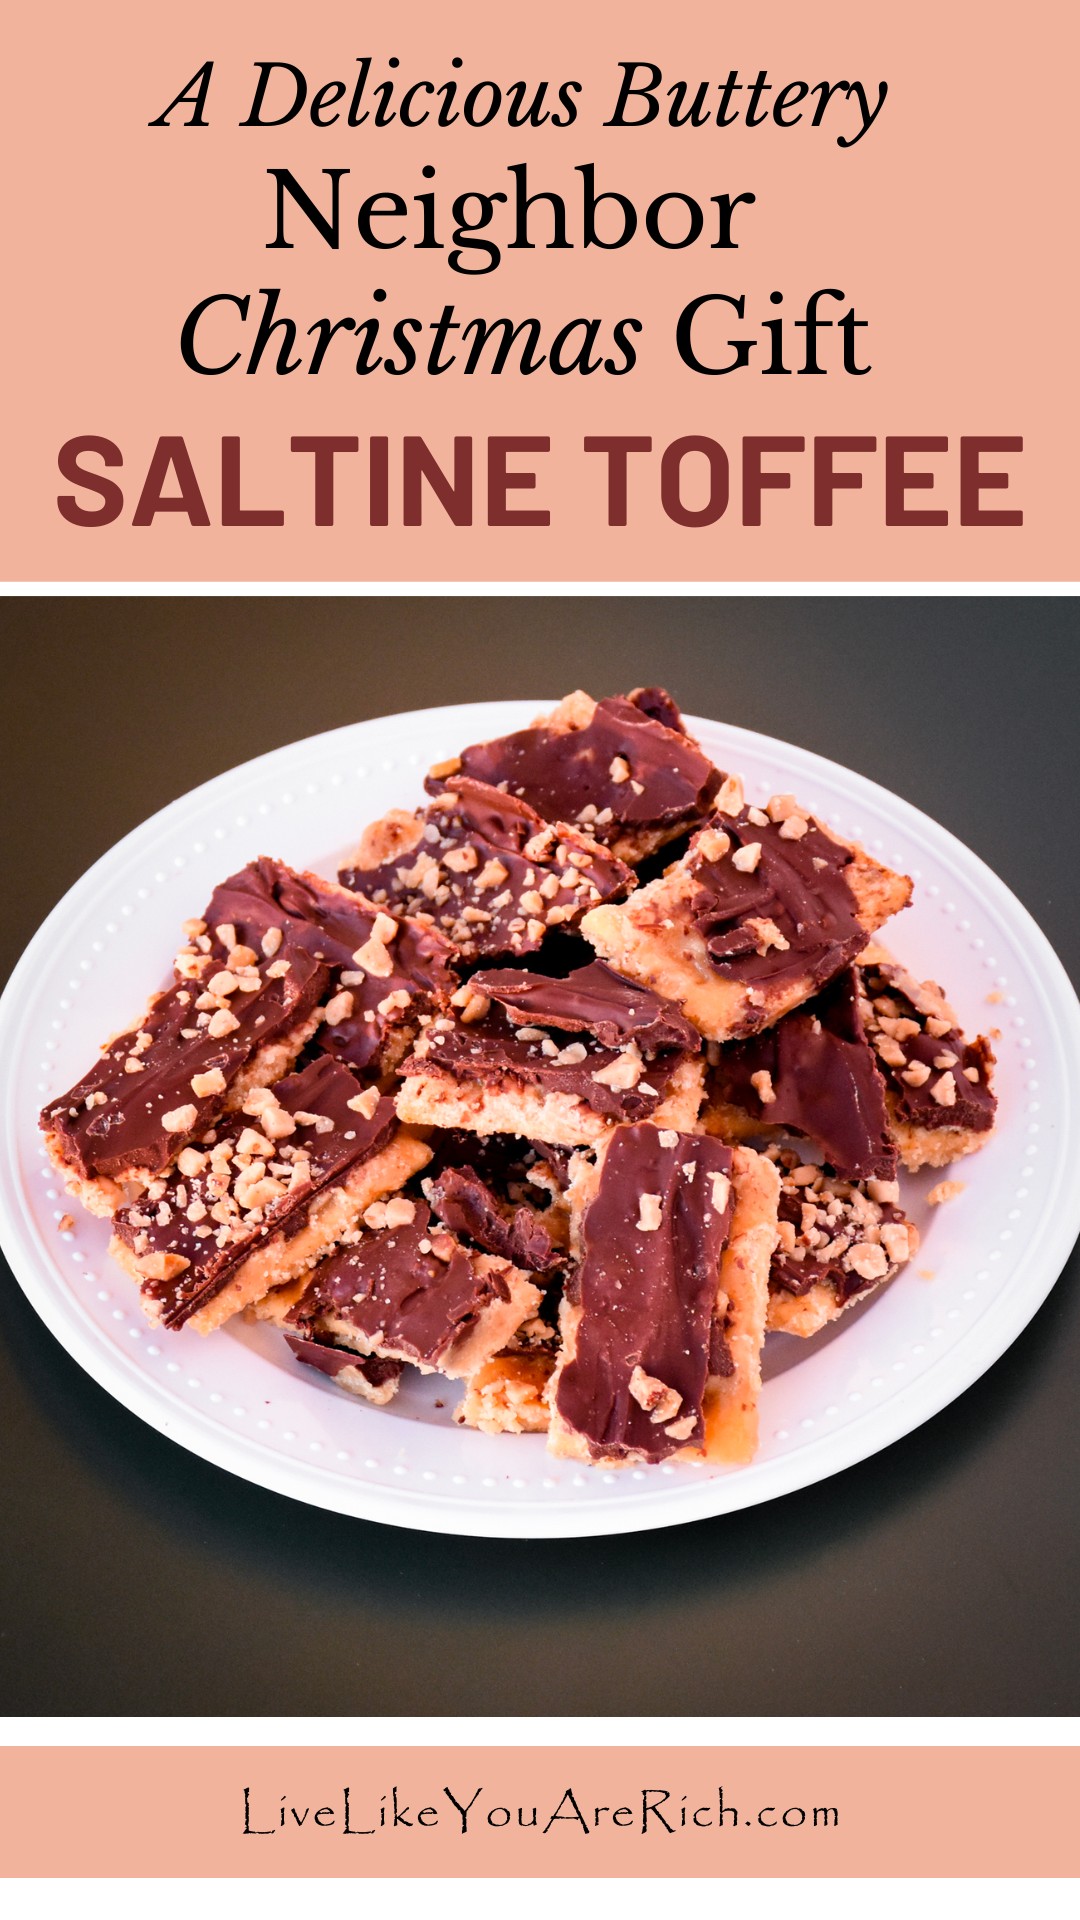 Neighbor Christmas Gift: Saltine Toffee